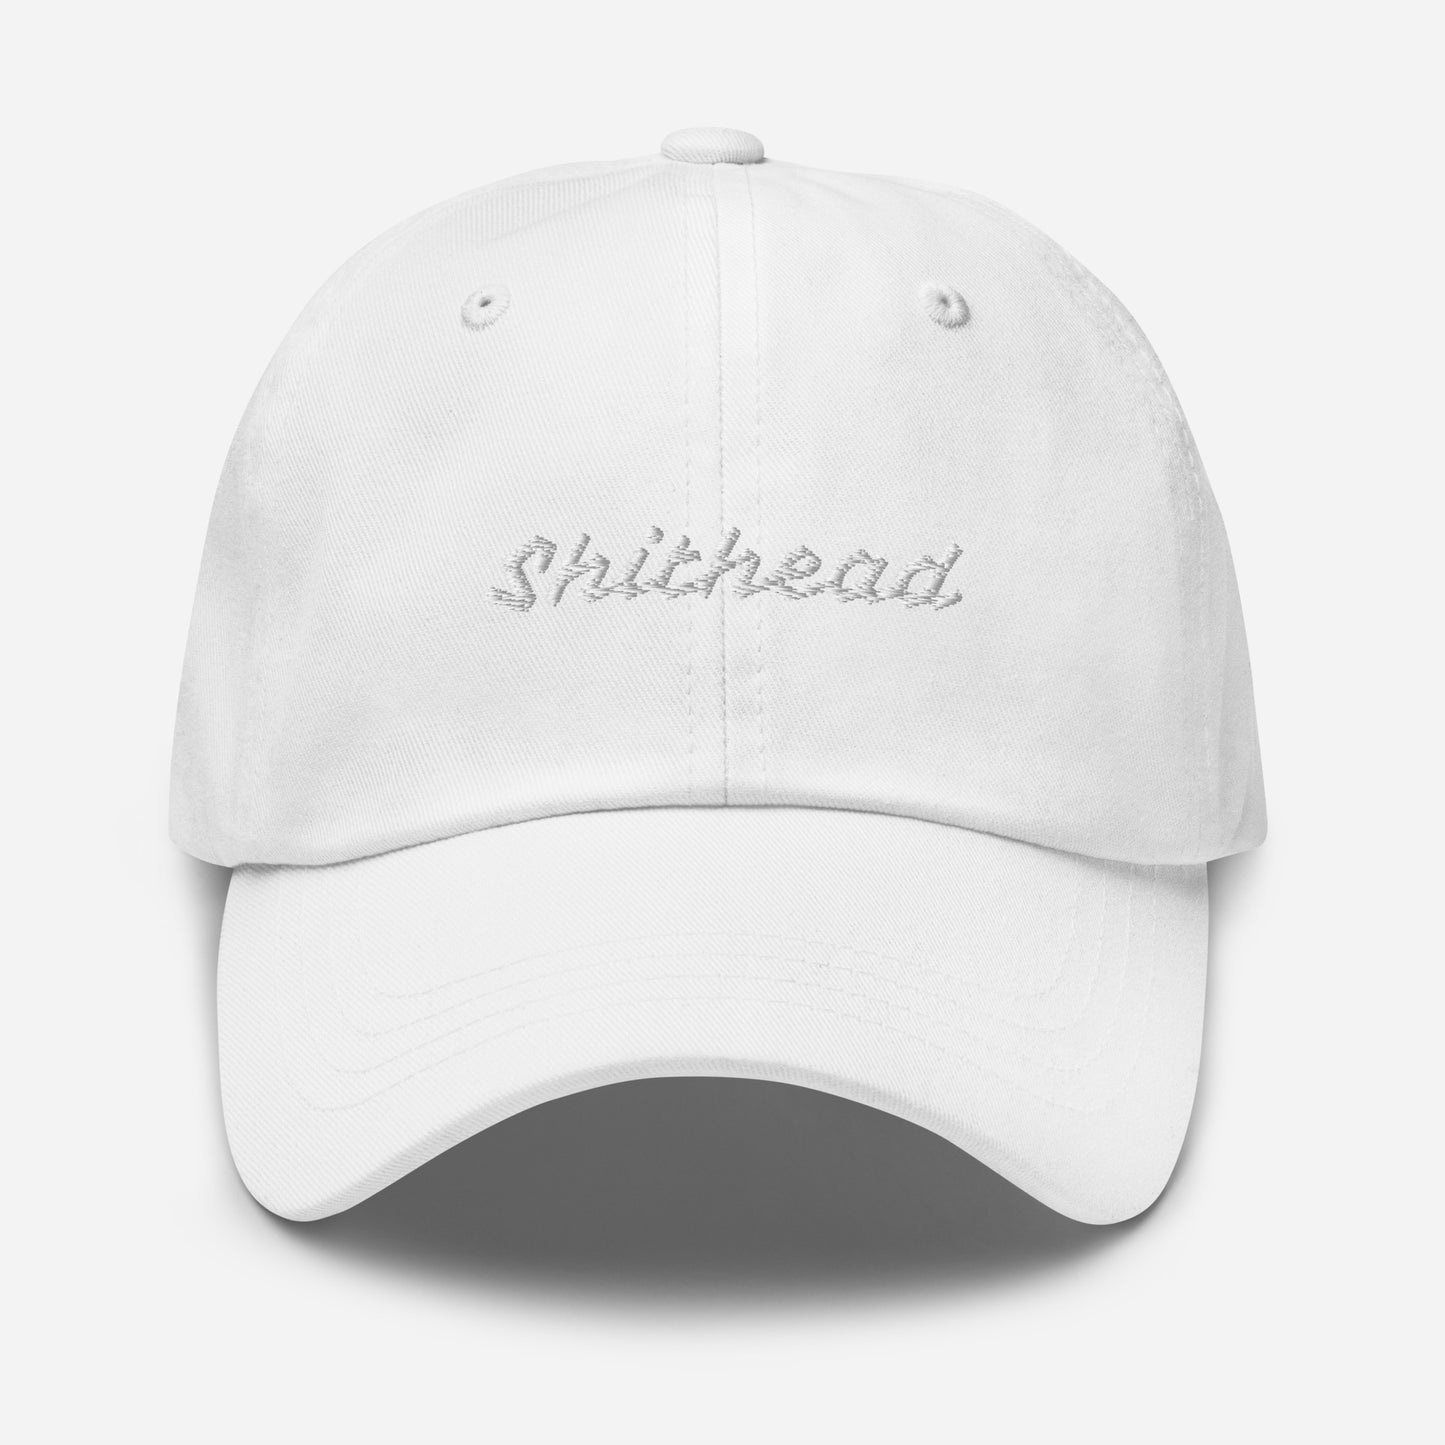 Shithead Dad hat